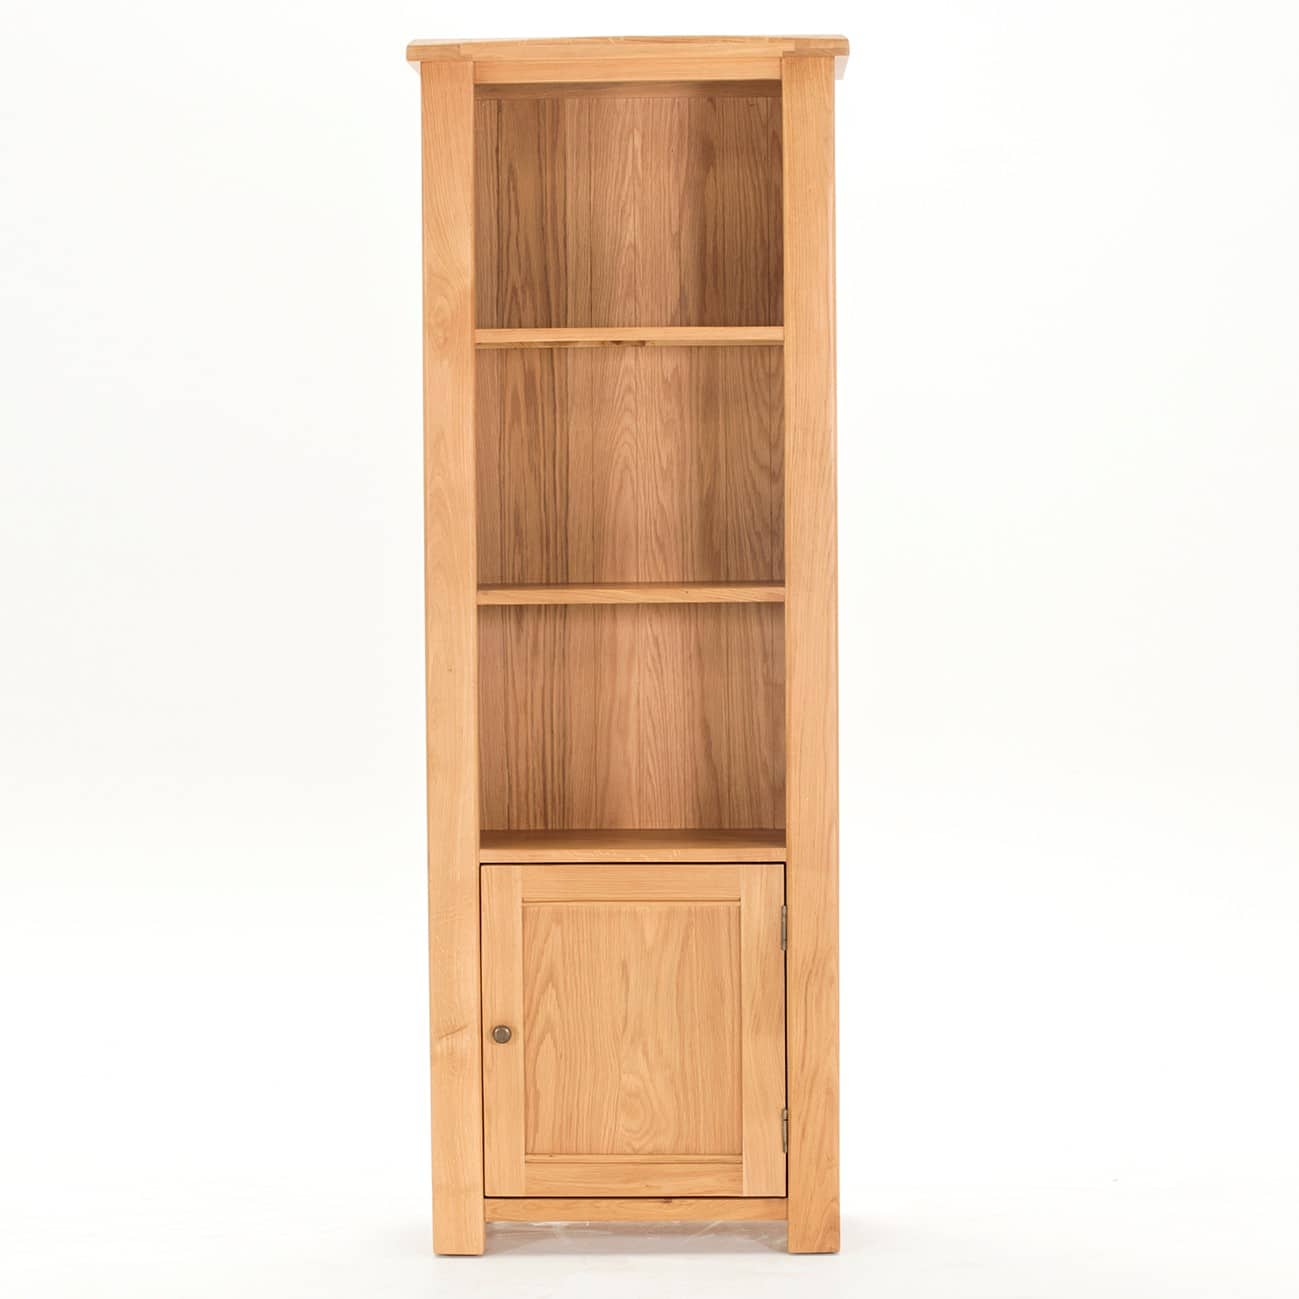 Breeze Oak Bookcase Only Furniture, Oak Bookcase Dresser